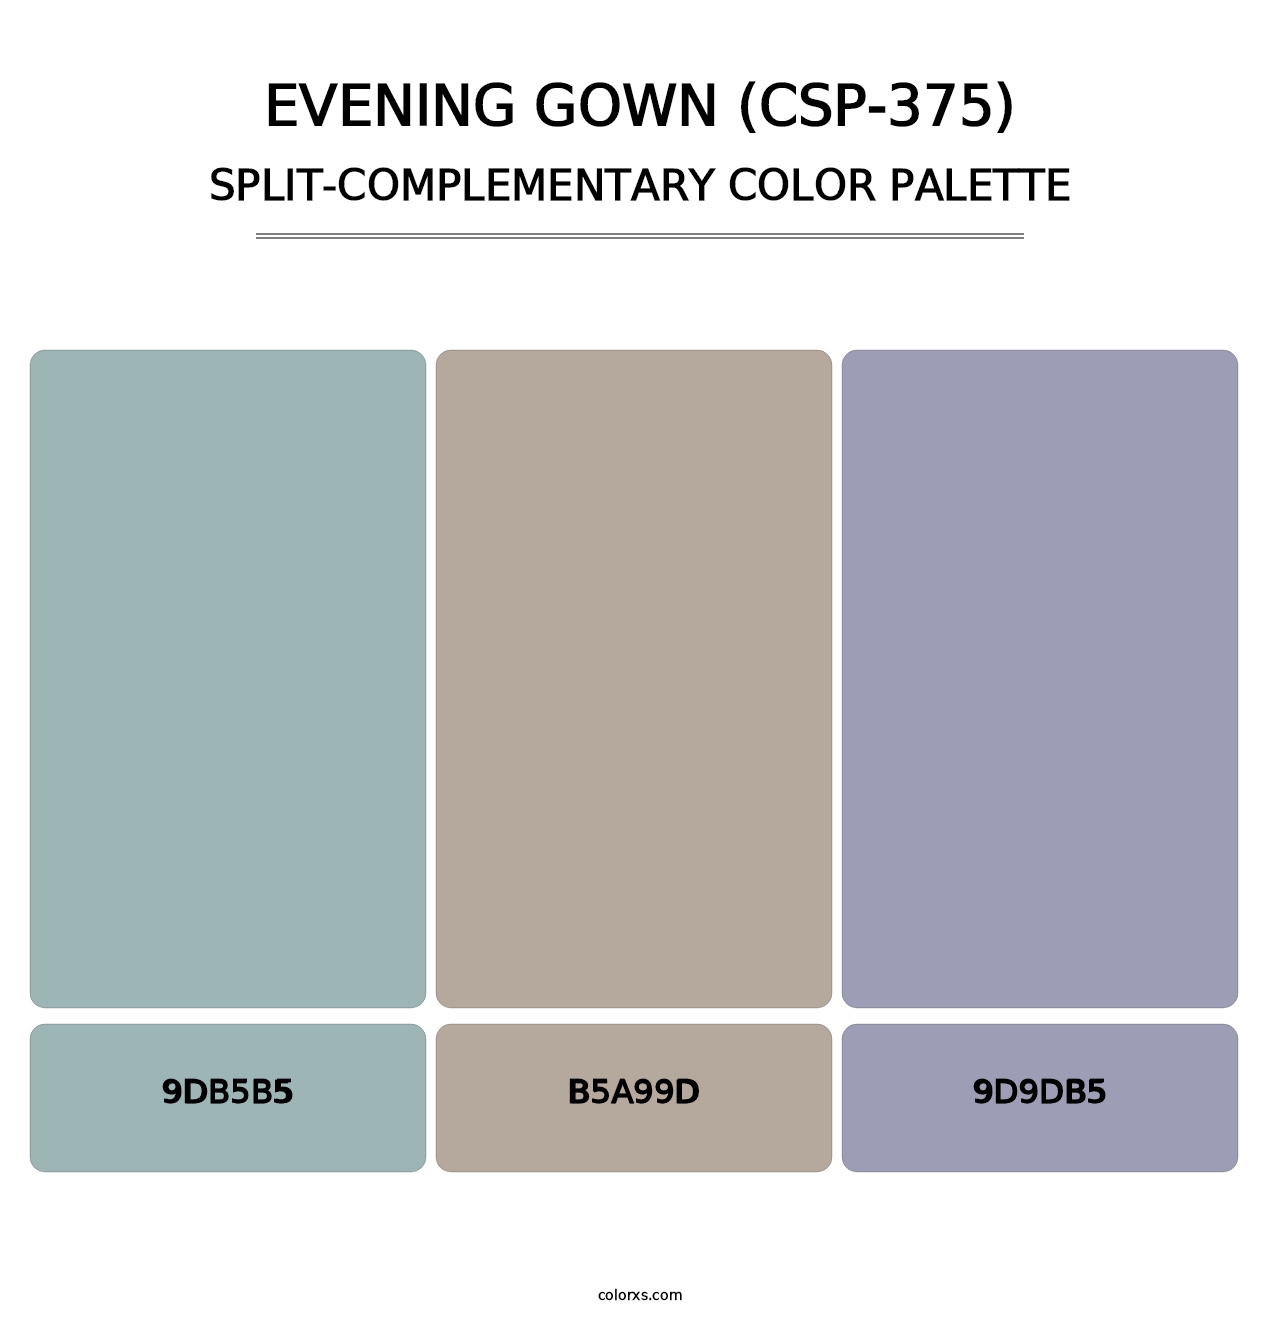 Evening Gown (CSP-375) - Split-Complementary Color Palette